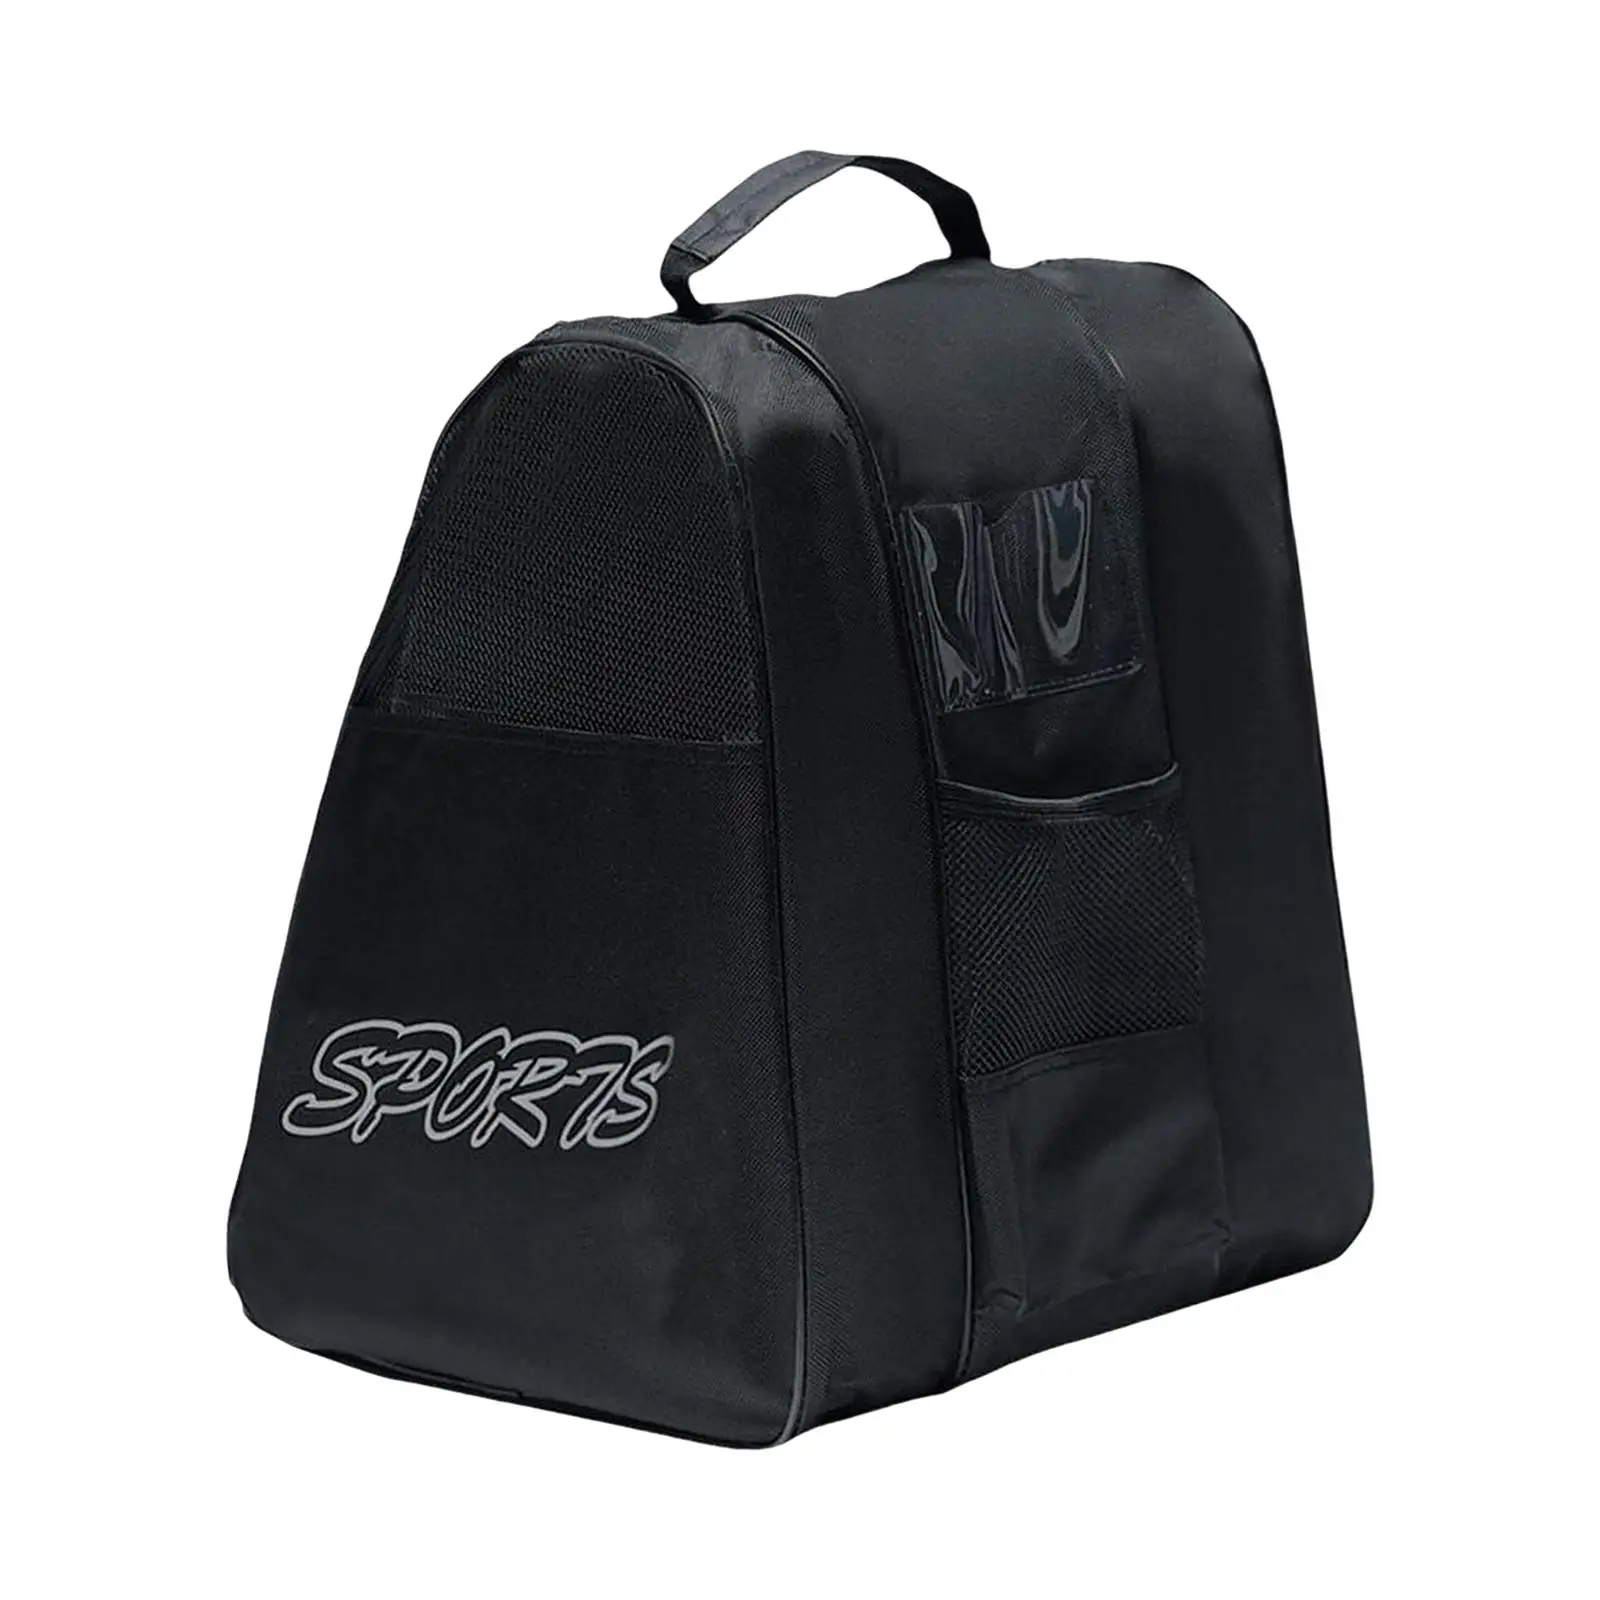 Roller Skating Bag Pouch with Shoulder Strap Portable Skate Accessories Roller Skate Carrier for Inline Skates Ice Hockey Skate